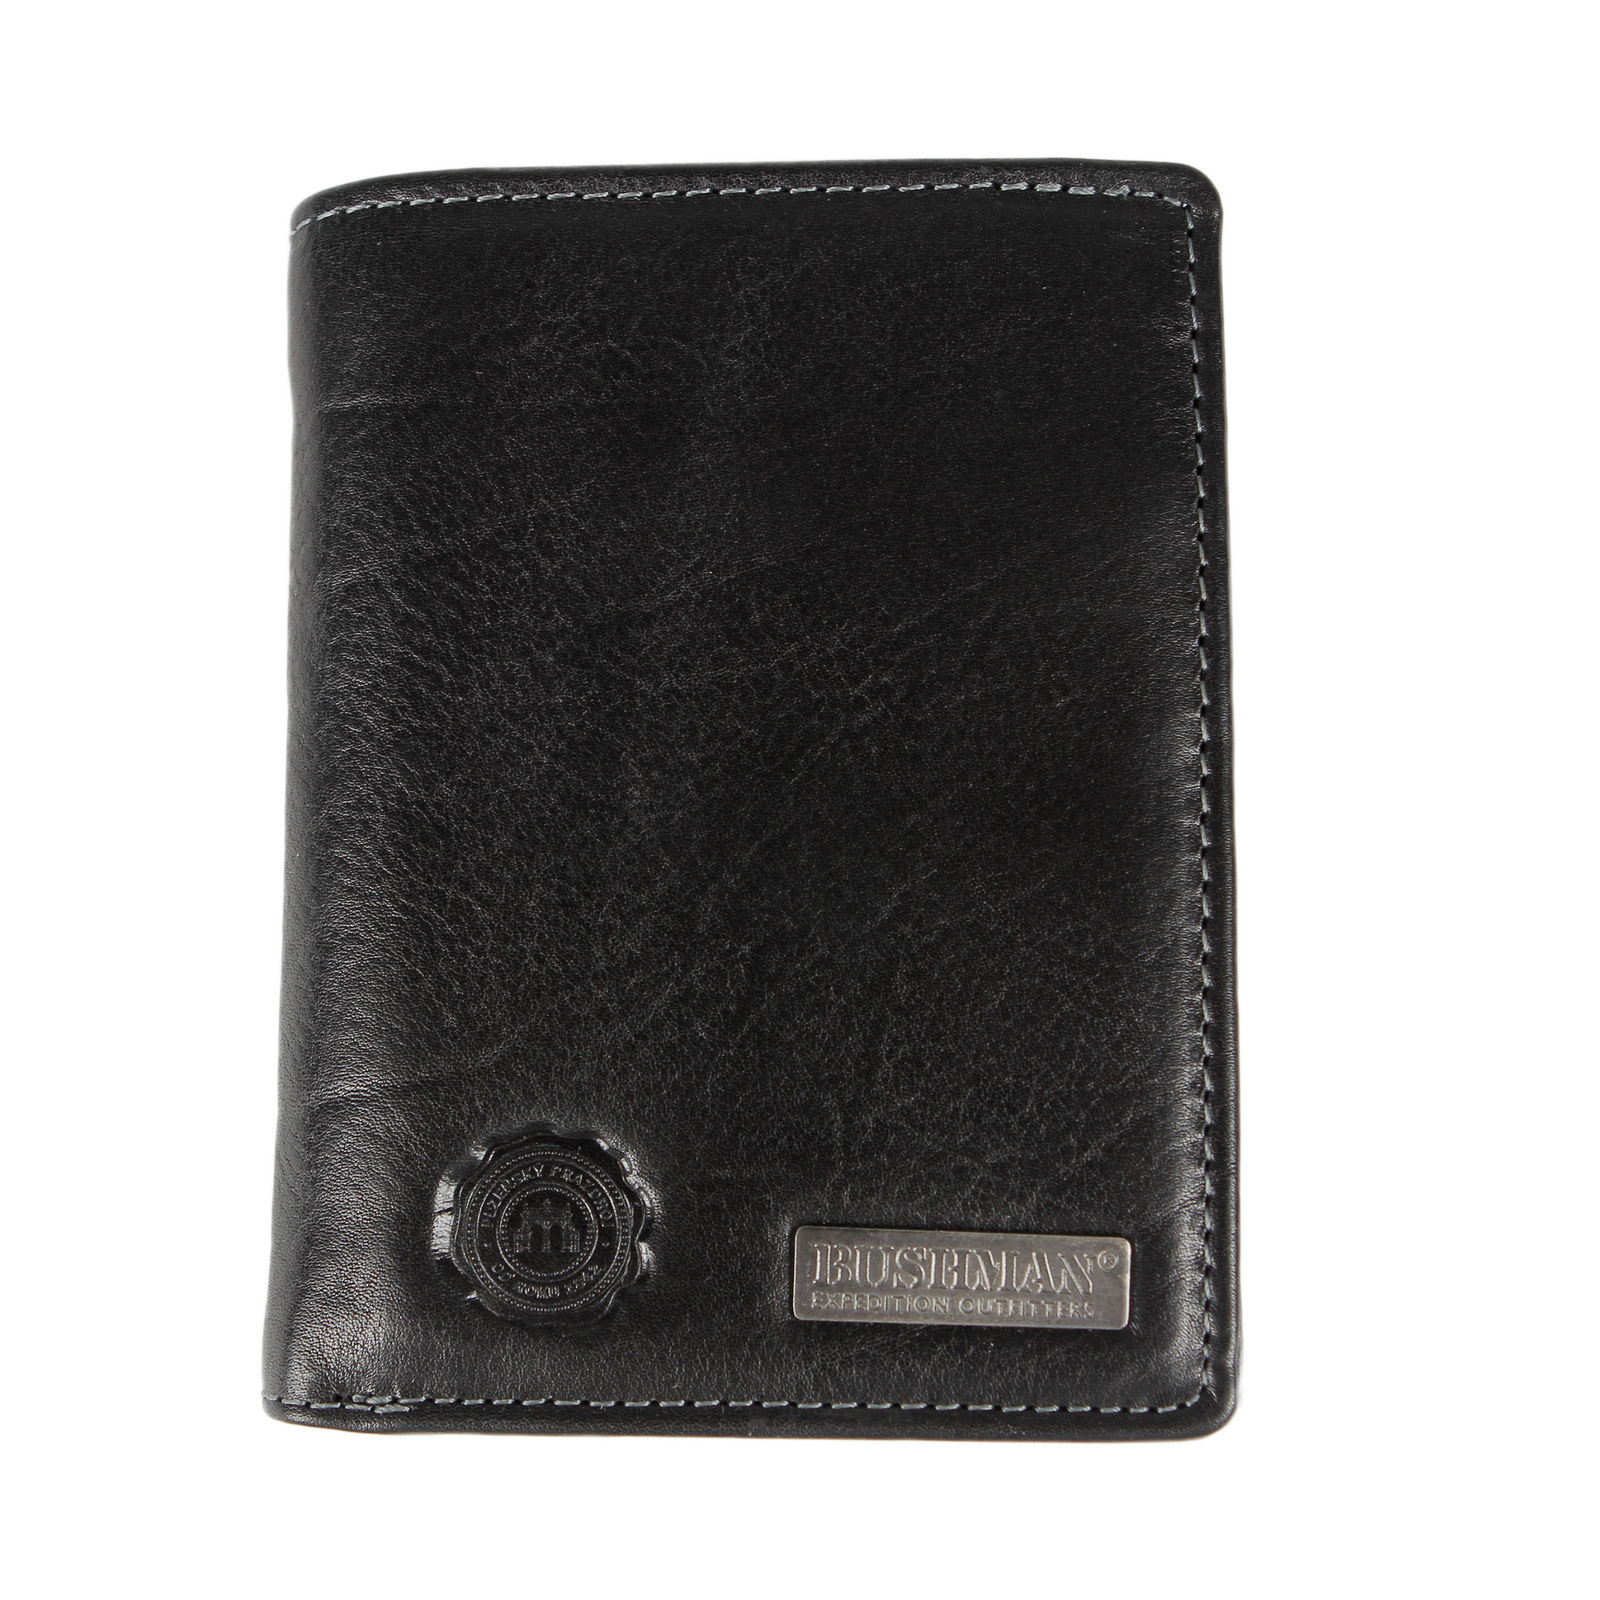 Pilsner Urquell Bushman leather wallet